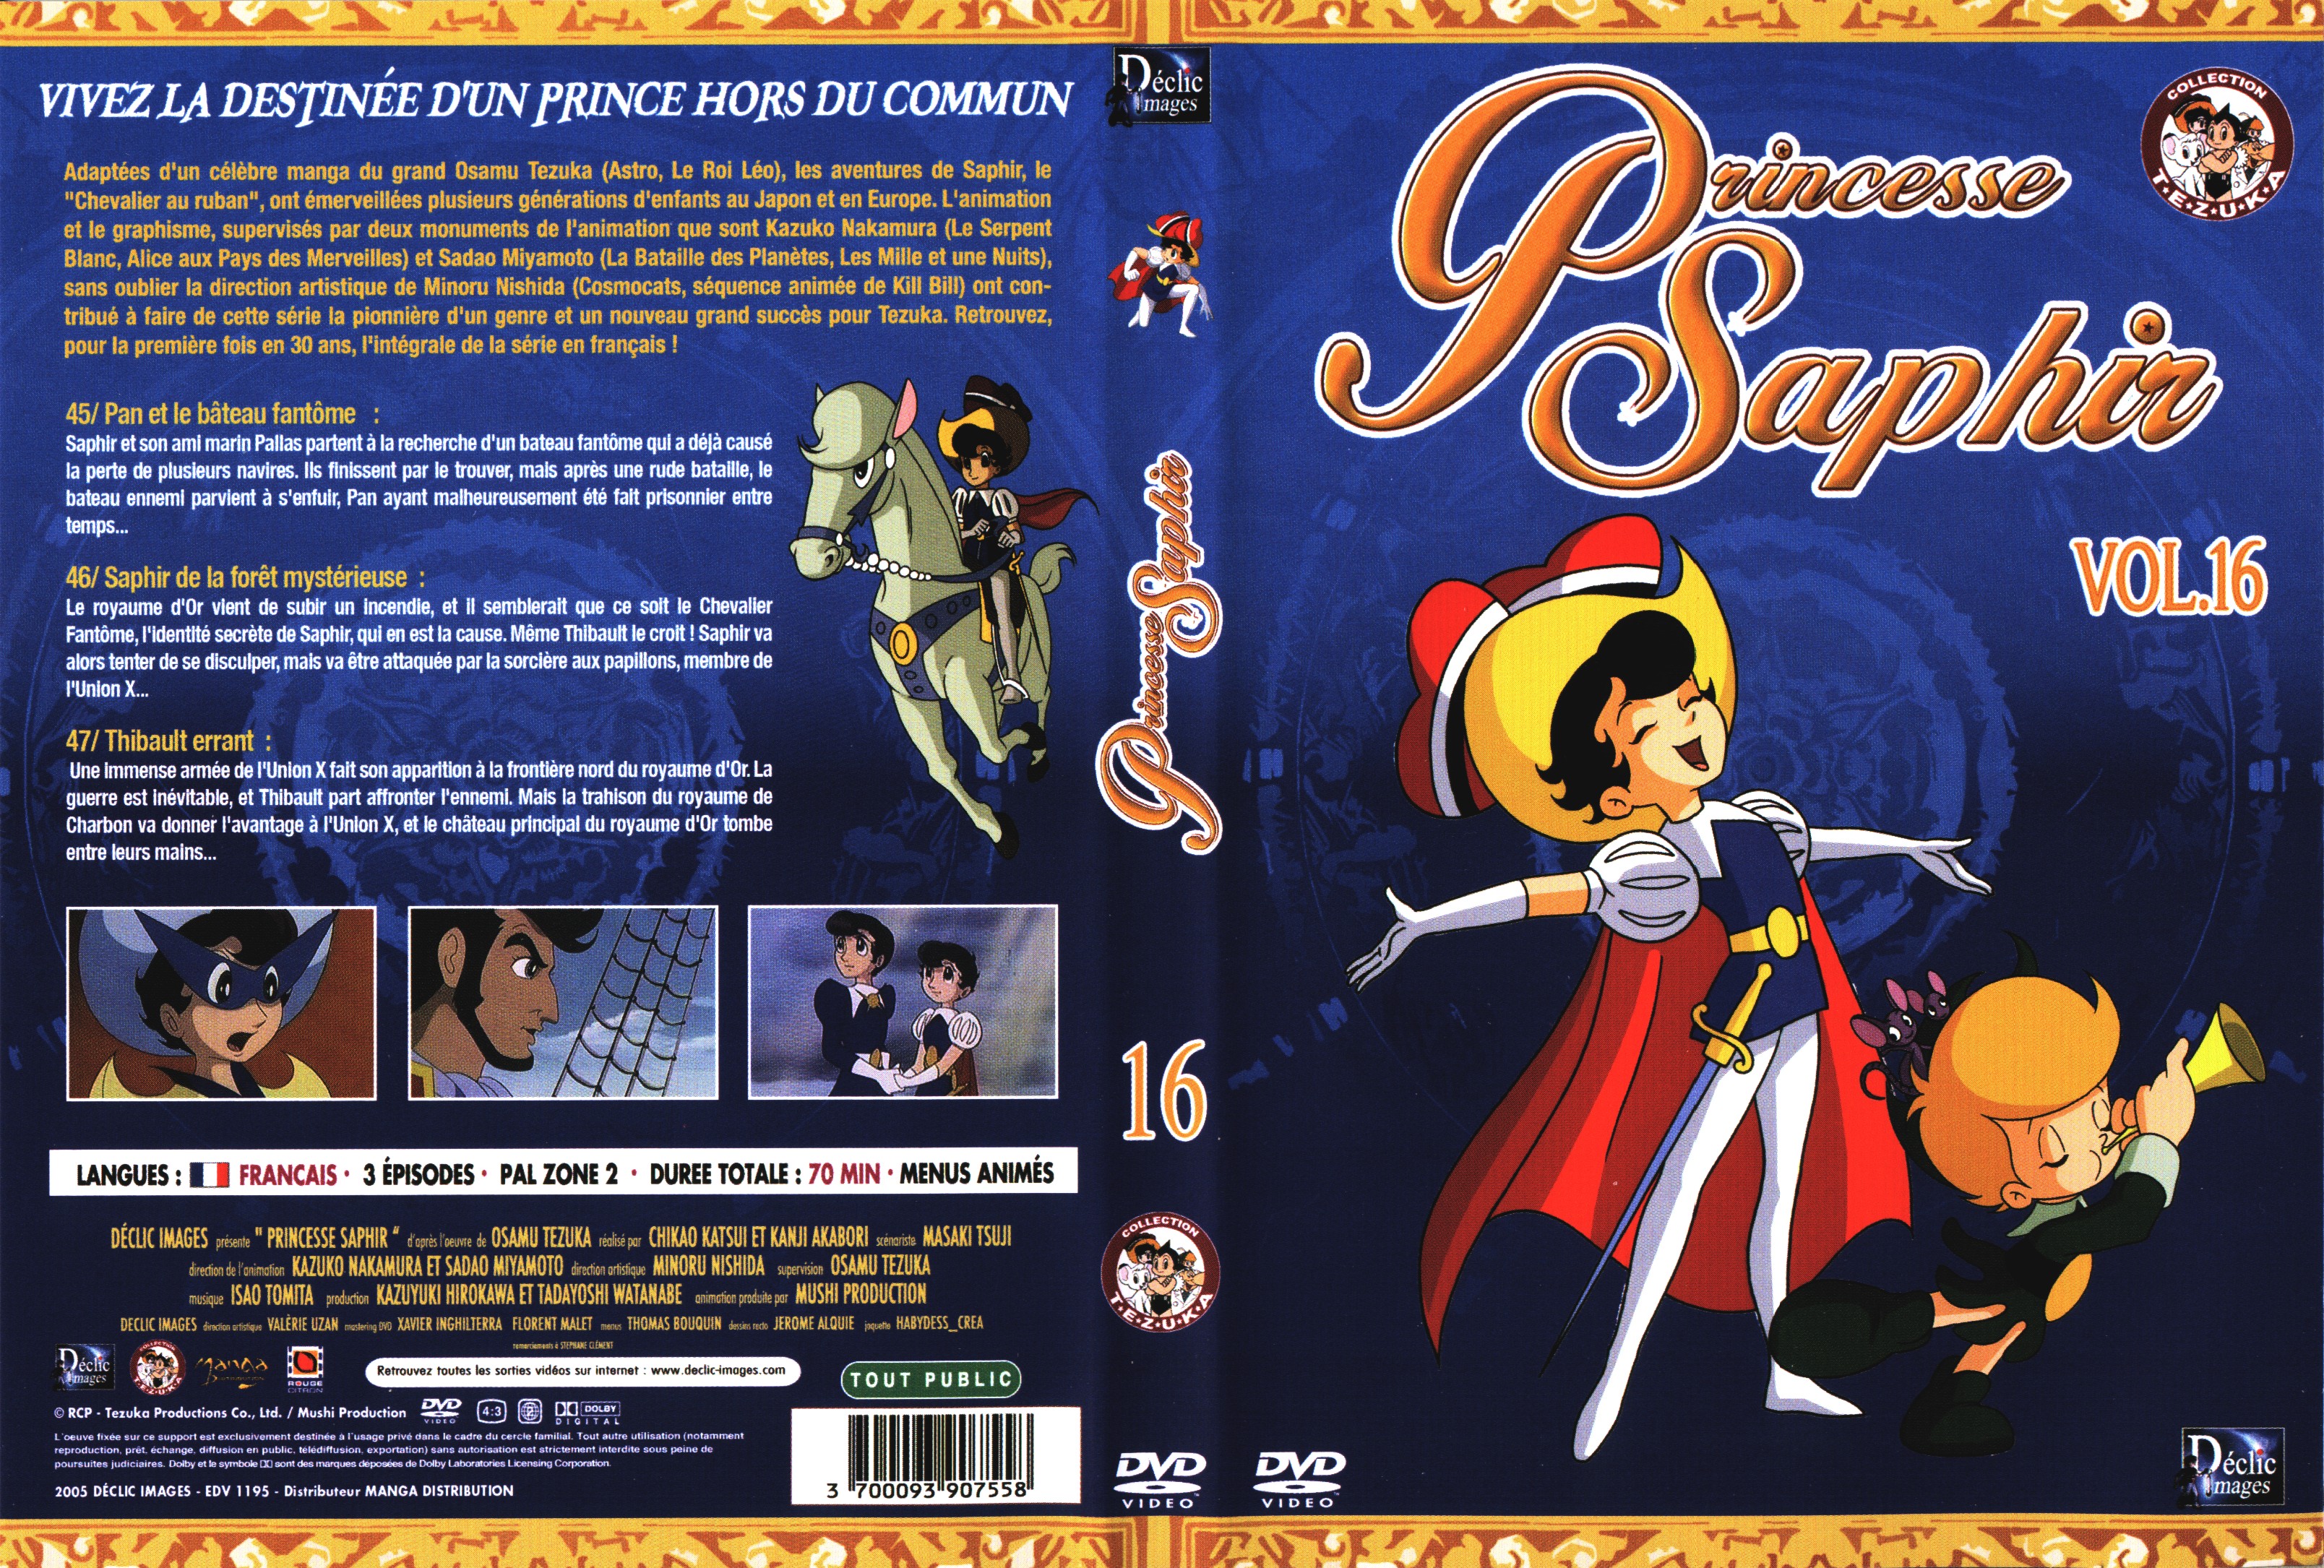 Jaquette DVD Princesse Saphir vol 16